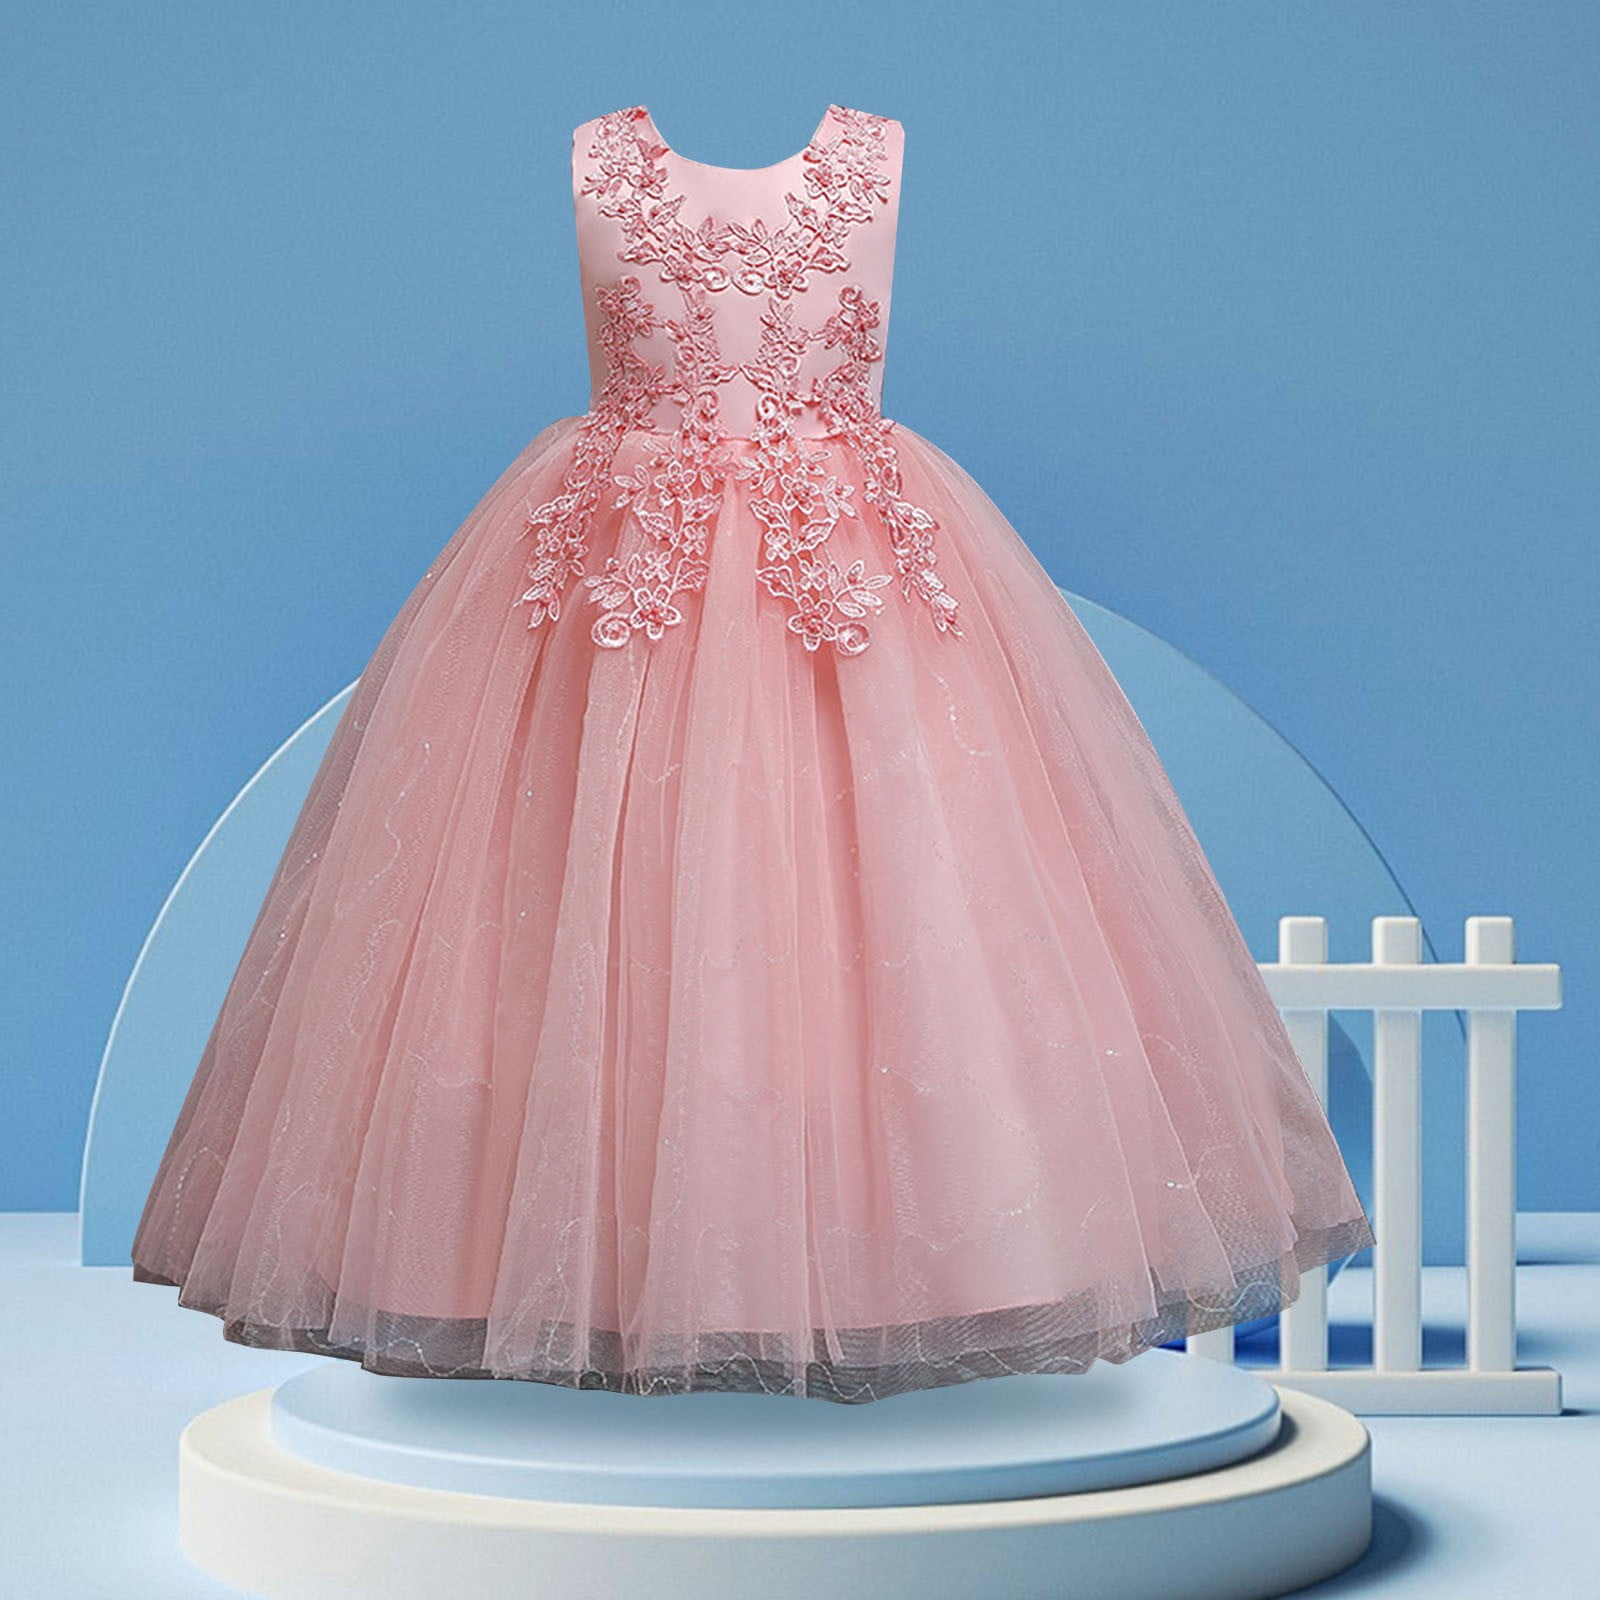 Deluxe Princess Tiana Costumes Little Girls Dress Kids Fancy Gown Cosplay  Halloween Party - Walmart.com